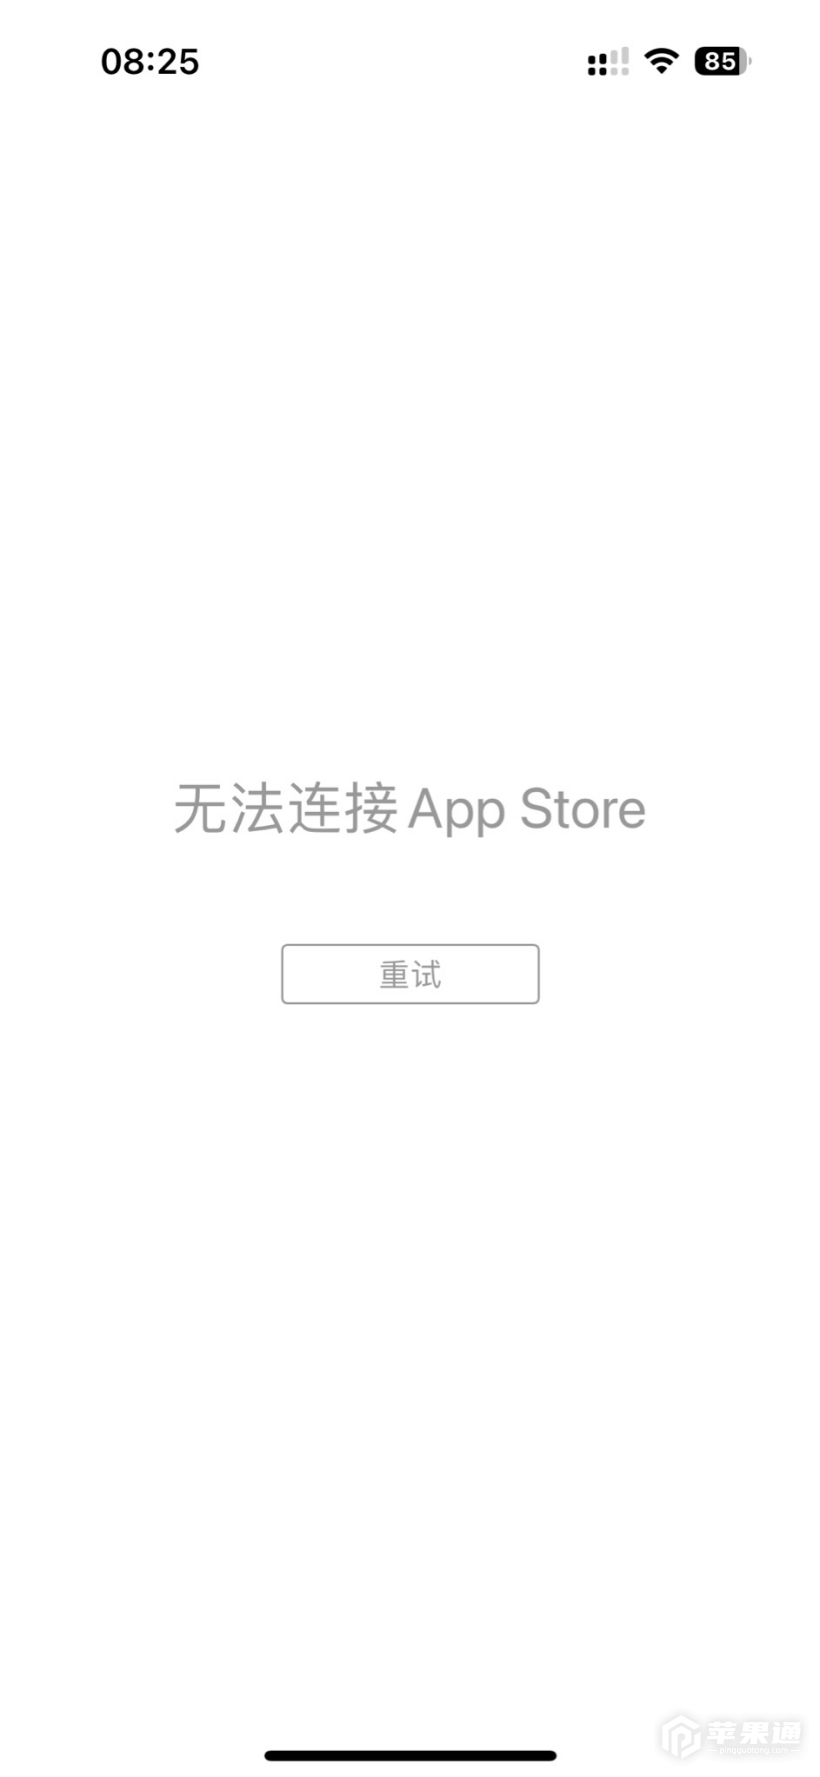 App Store“崩了”，多位用户反馈无法连接